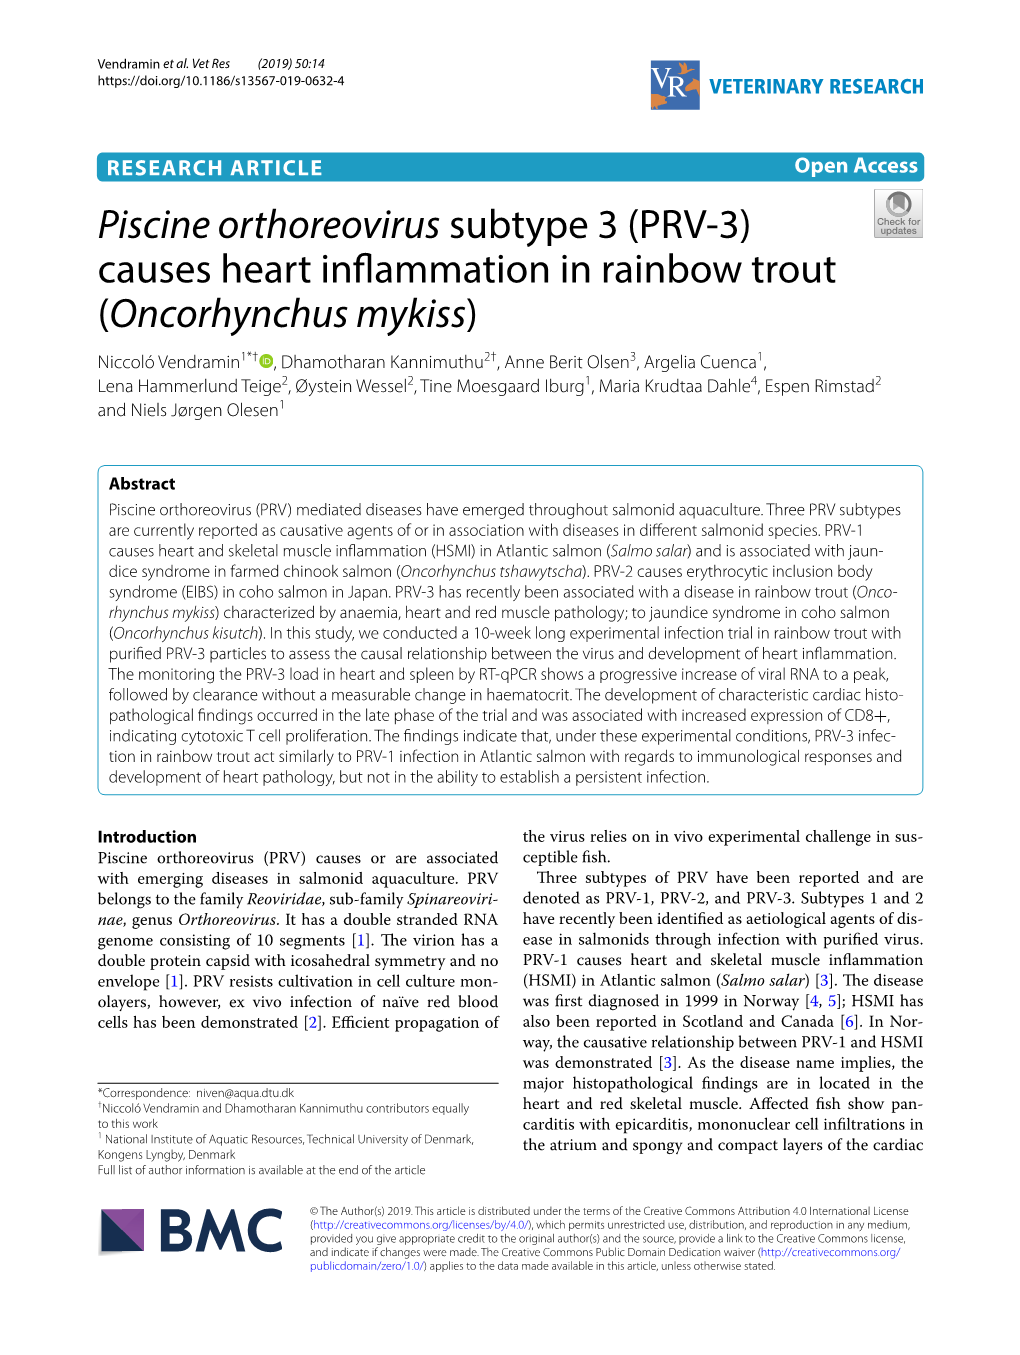 Piscine Orthoreovirus Subtype 3 (PRV-3) Causes Heart Inflammation in Rainbow Trout (Oncorhynchus Mykiss)